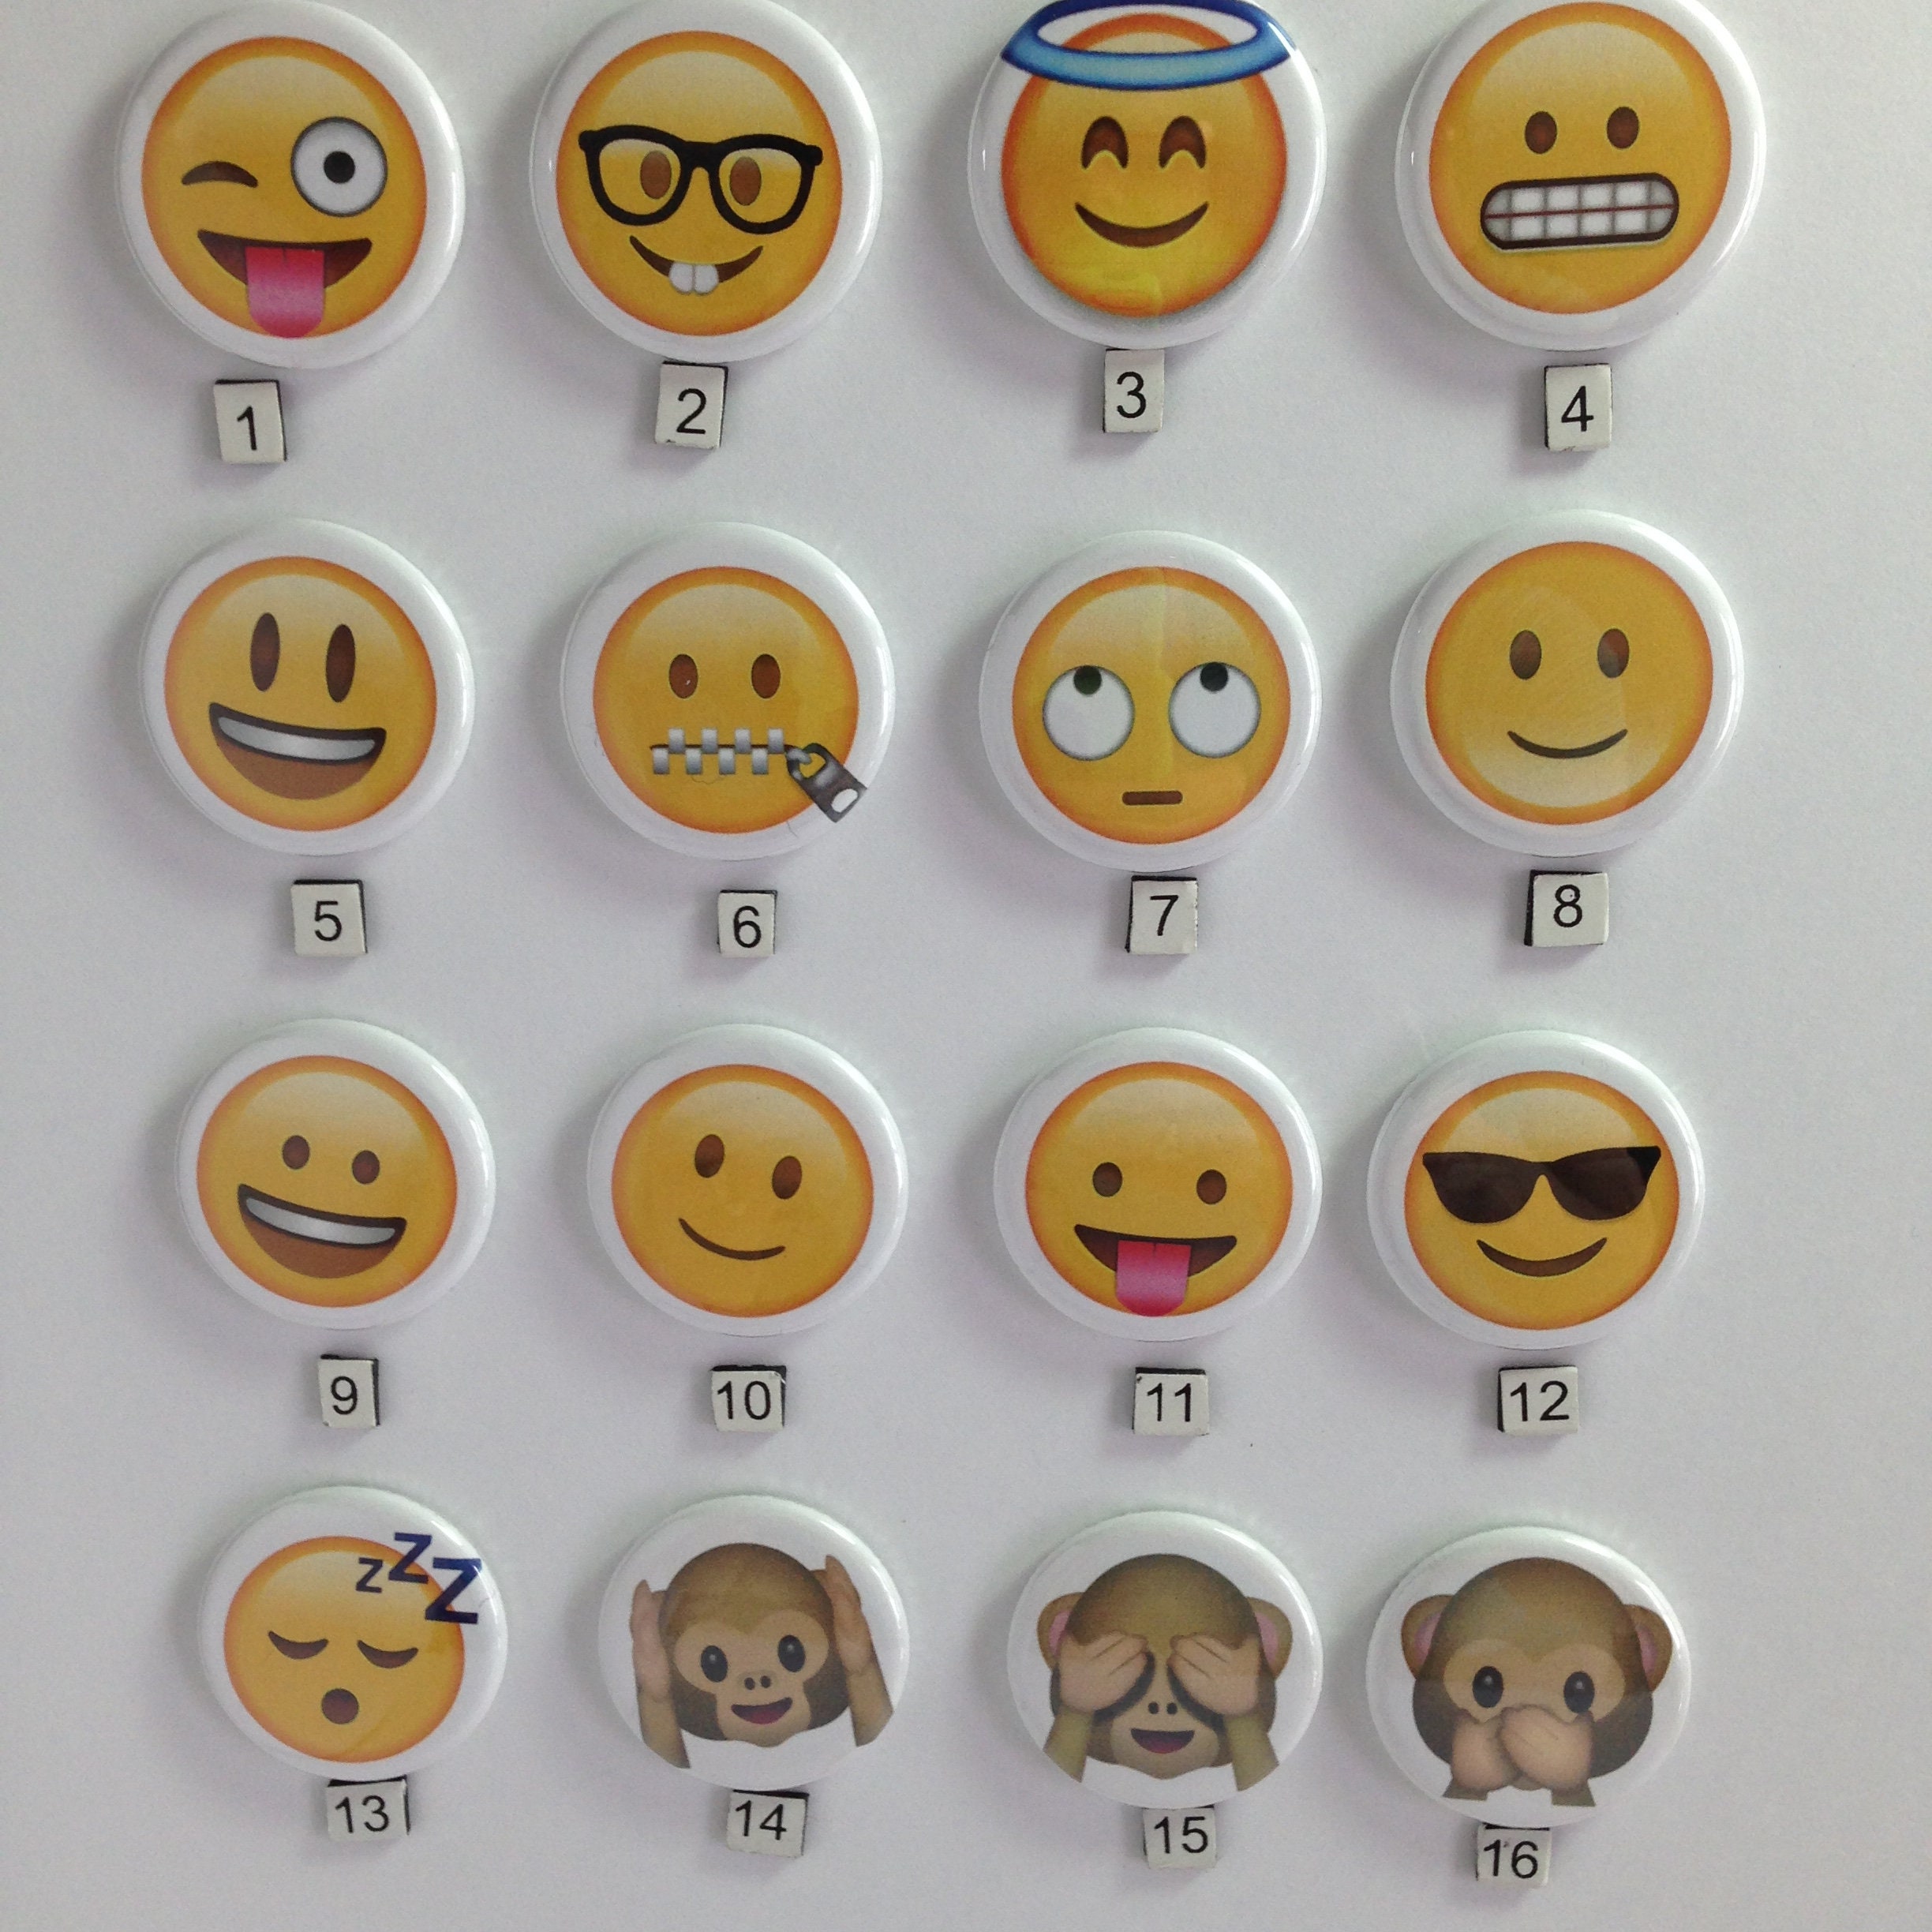 Pin by Beel on Cursed emojis <3  Cute love memes, Emoji art, Drawing  expressions